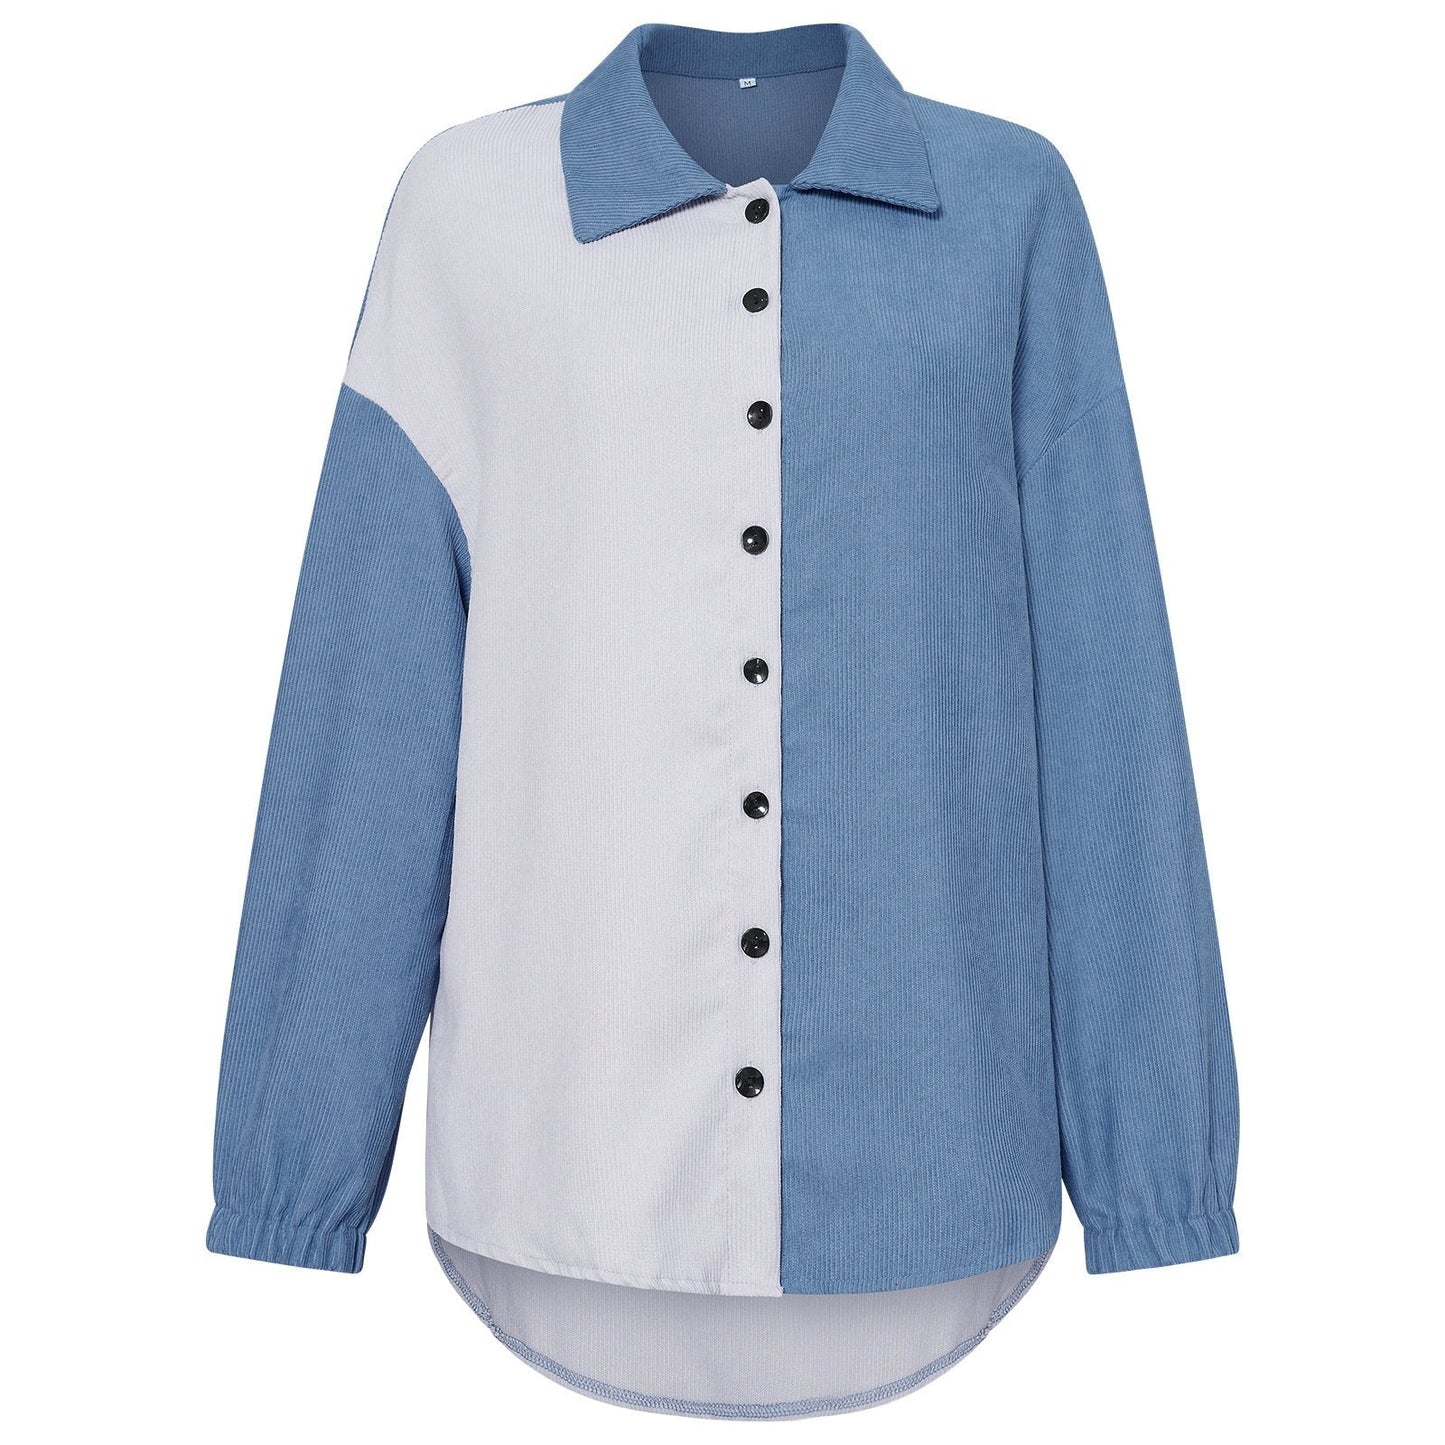 Dusty Blue Button Long Sleeve Shirt Collar Blouse